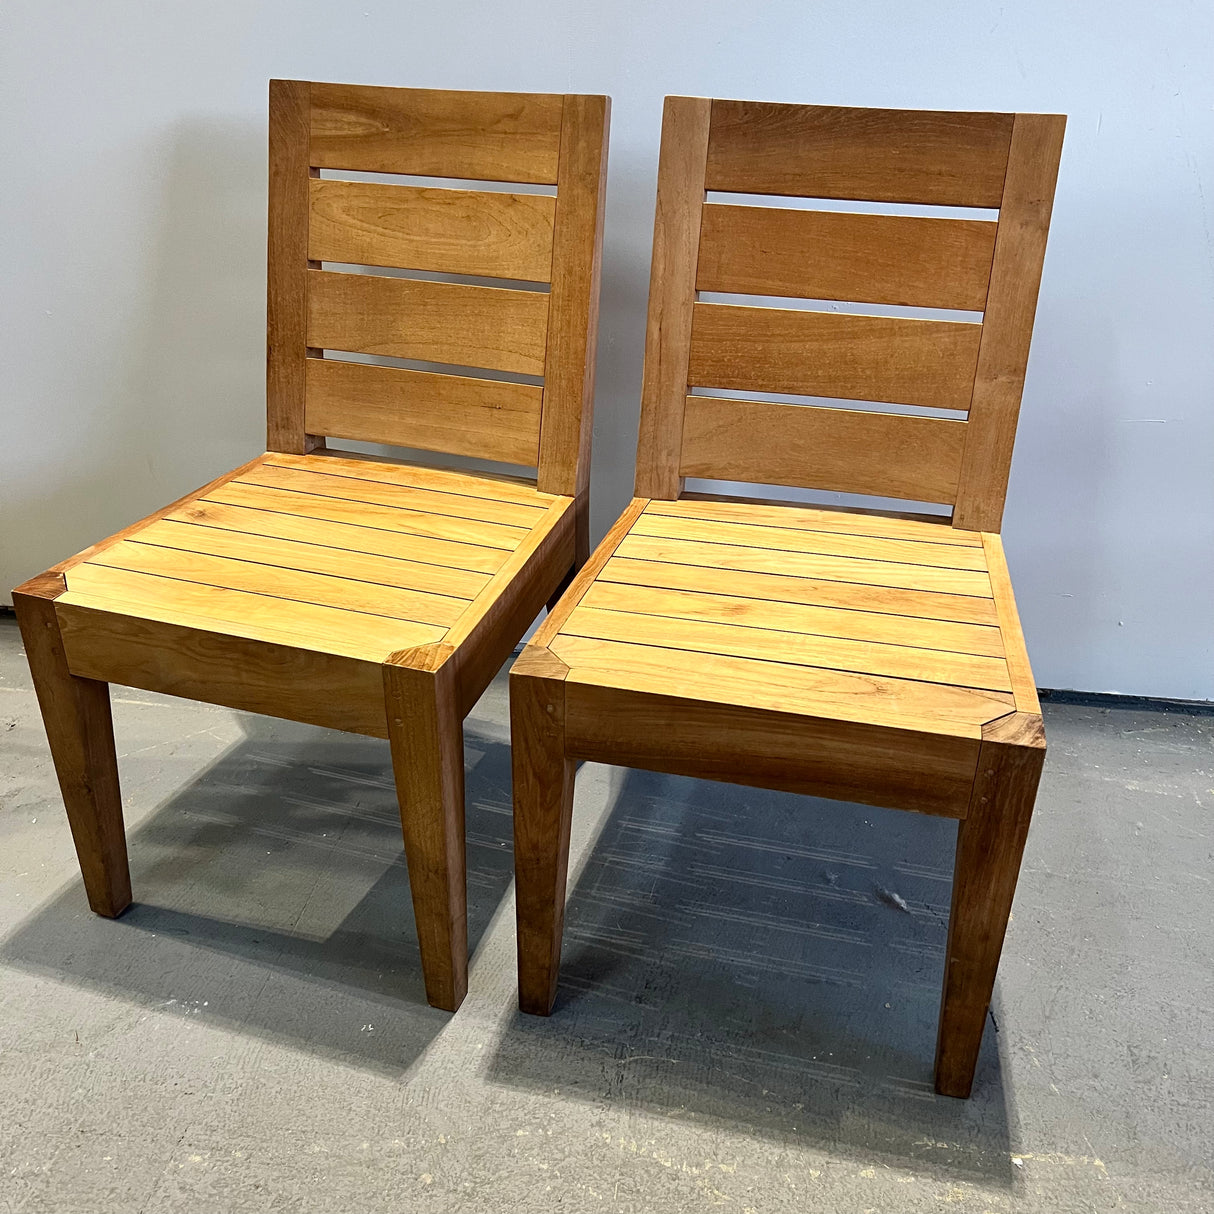 Pair of Restoration Hardware teak wood outdoor chair (Retail $1500+)